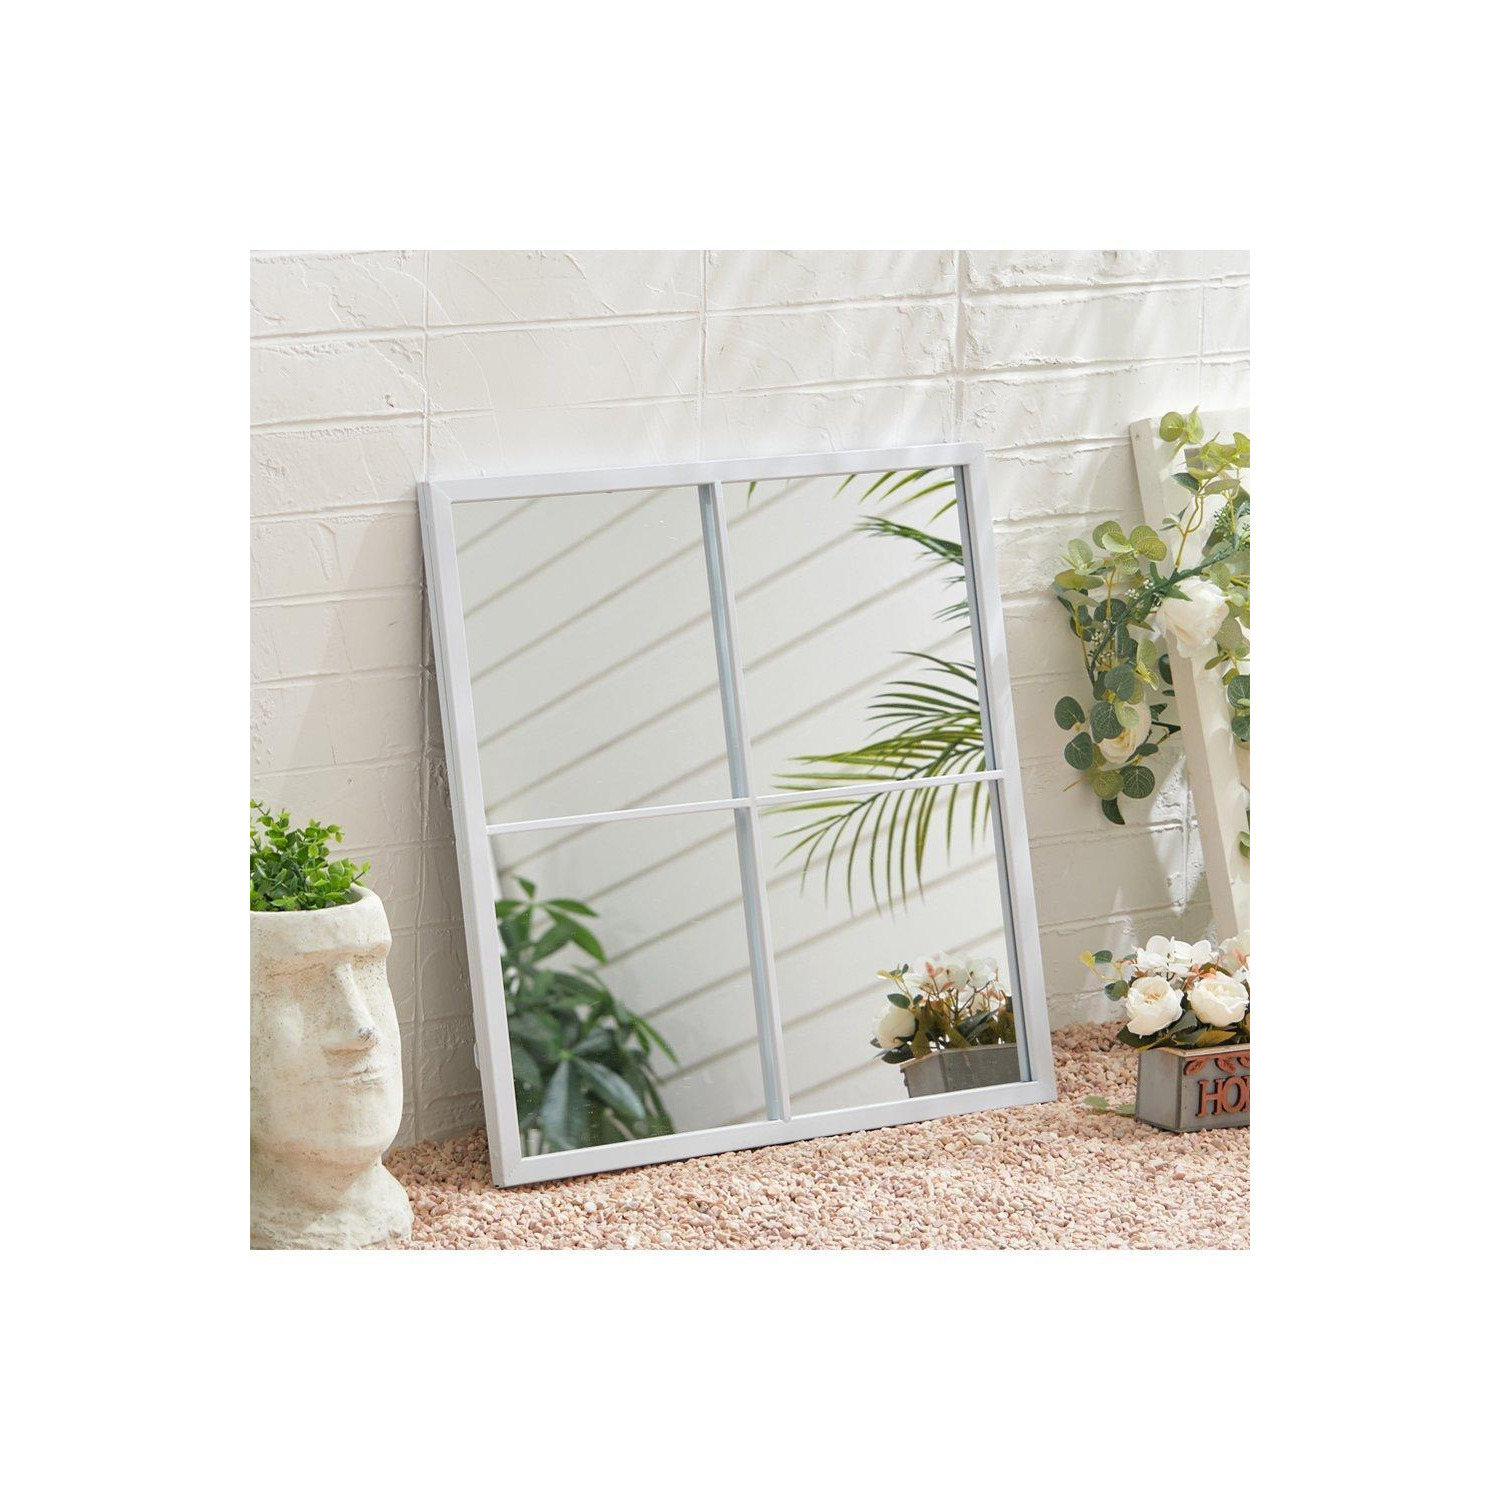 60cm W Square 4 Pane Window Mirror with White Metal Frame - image 1